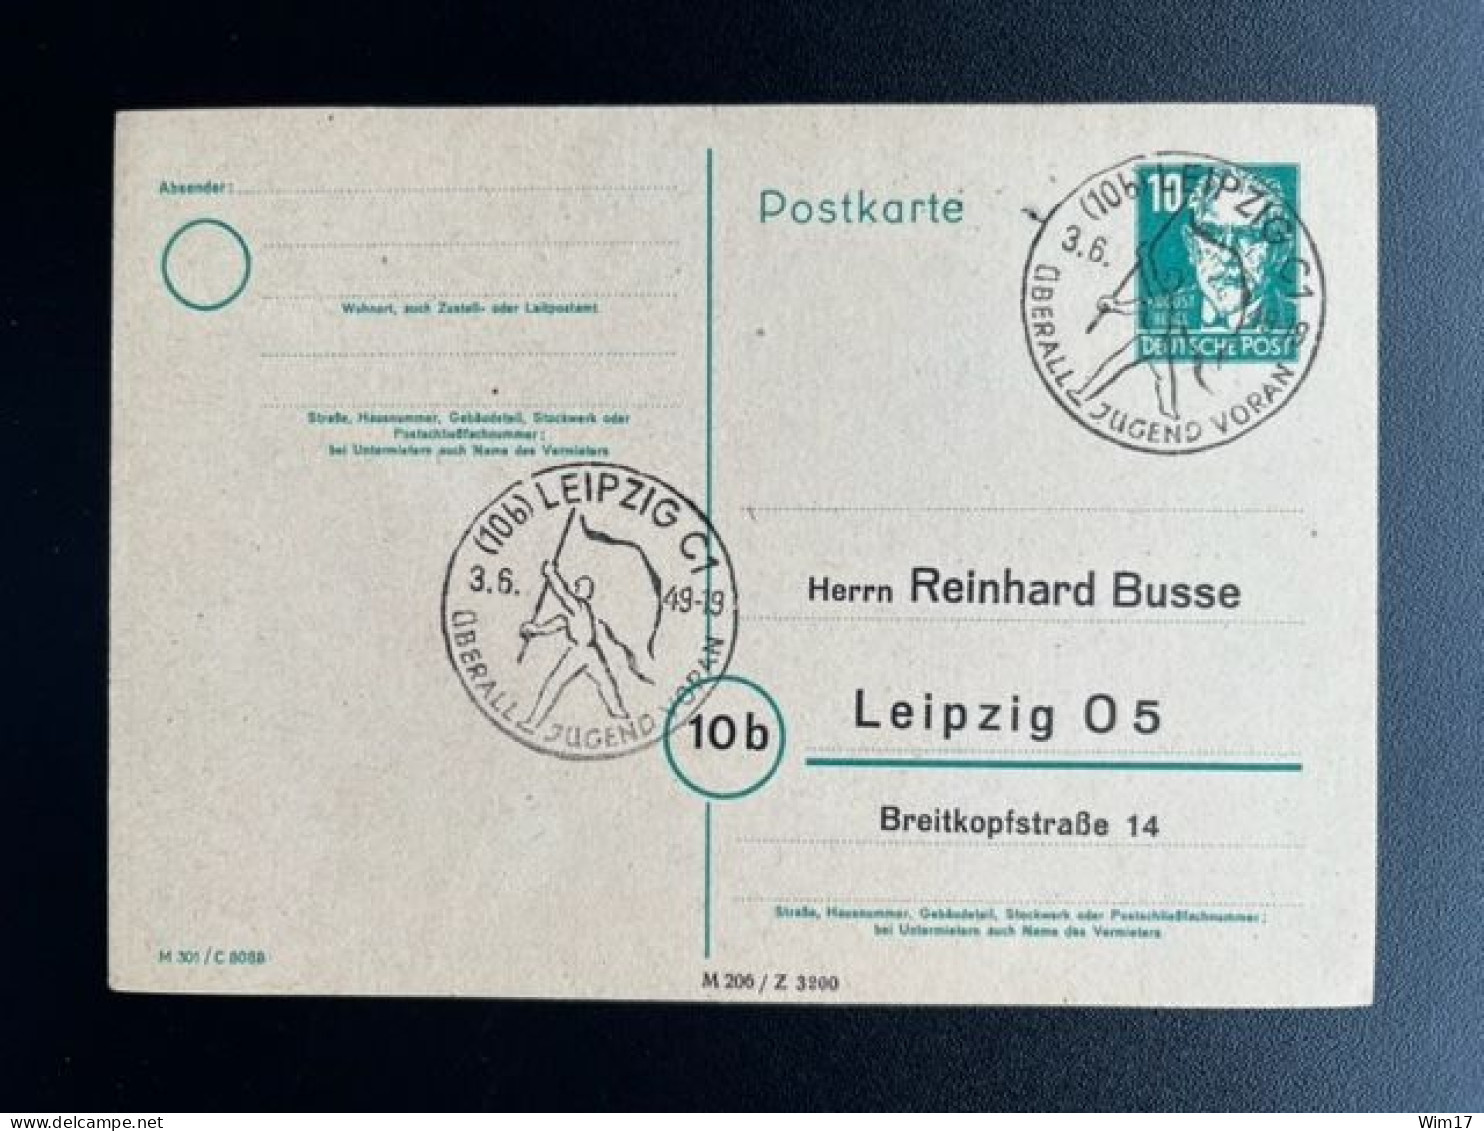 GERMANY 1949 POSTCARD LEIPZIG 03-06-1949 DUITSLAND DEUTSCHLAND SST UBERALL JUGEND VORAN - Enteros Postales